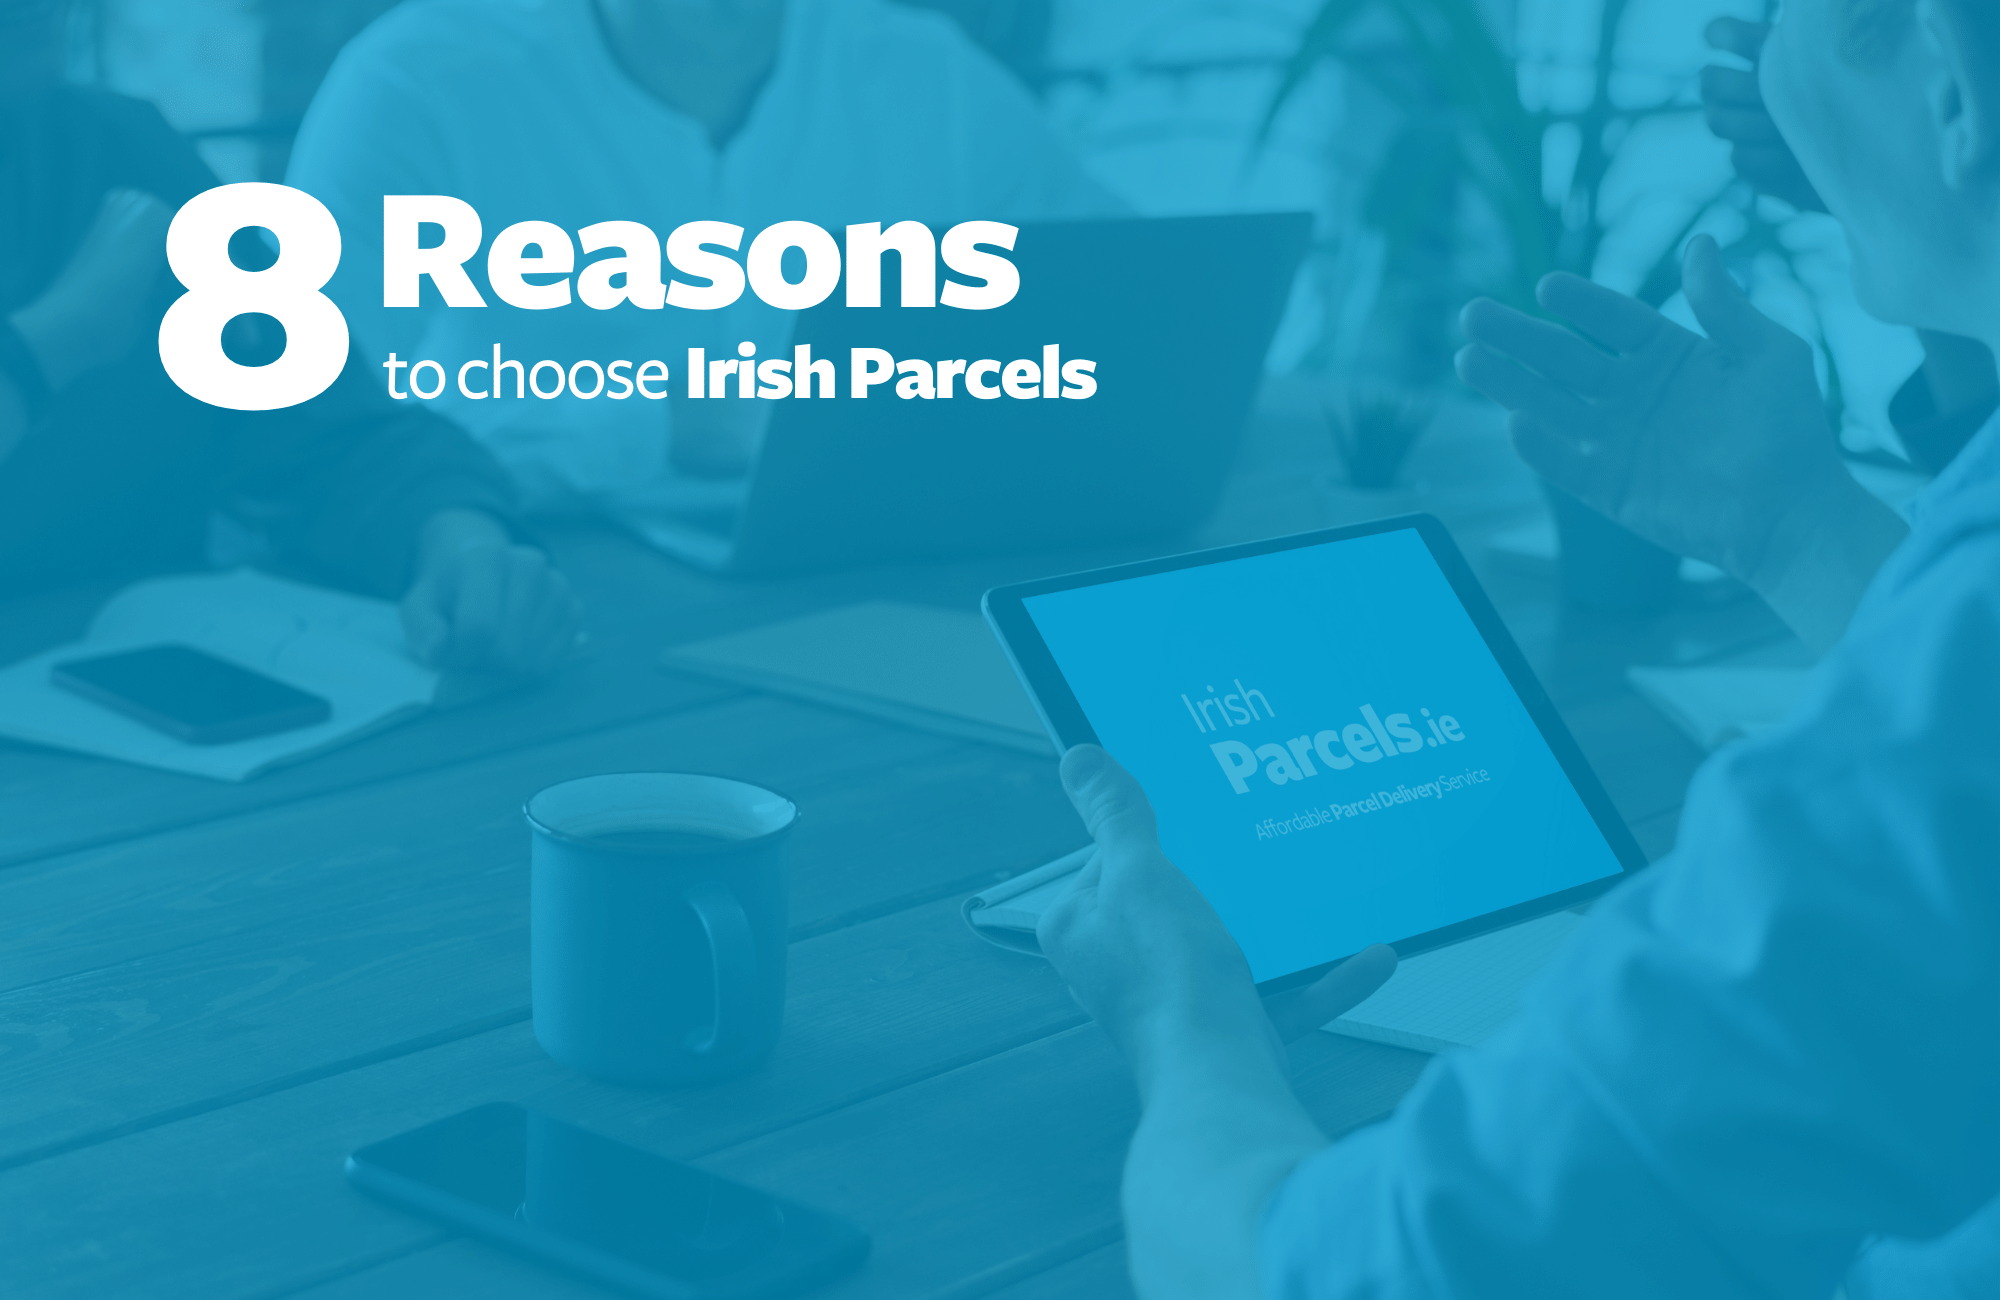 8 reasons to choose Irish Parcels